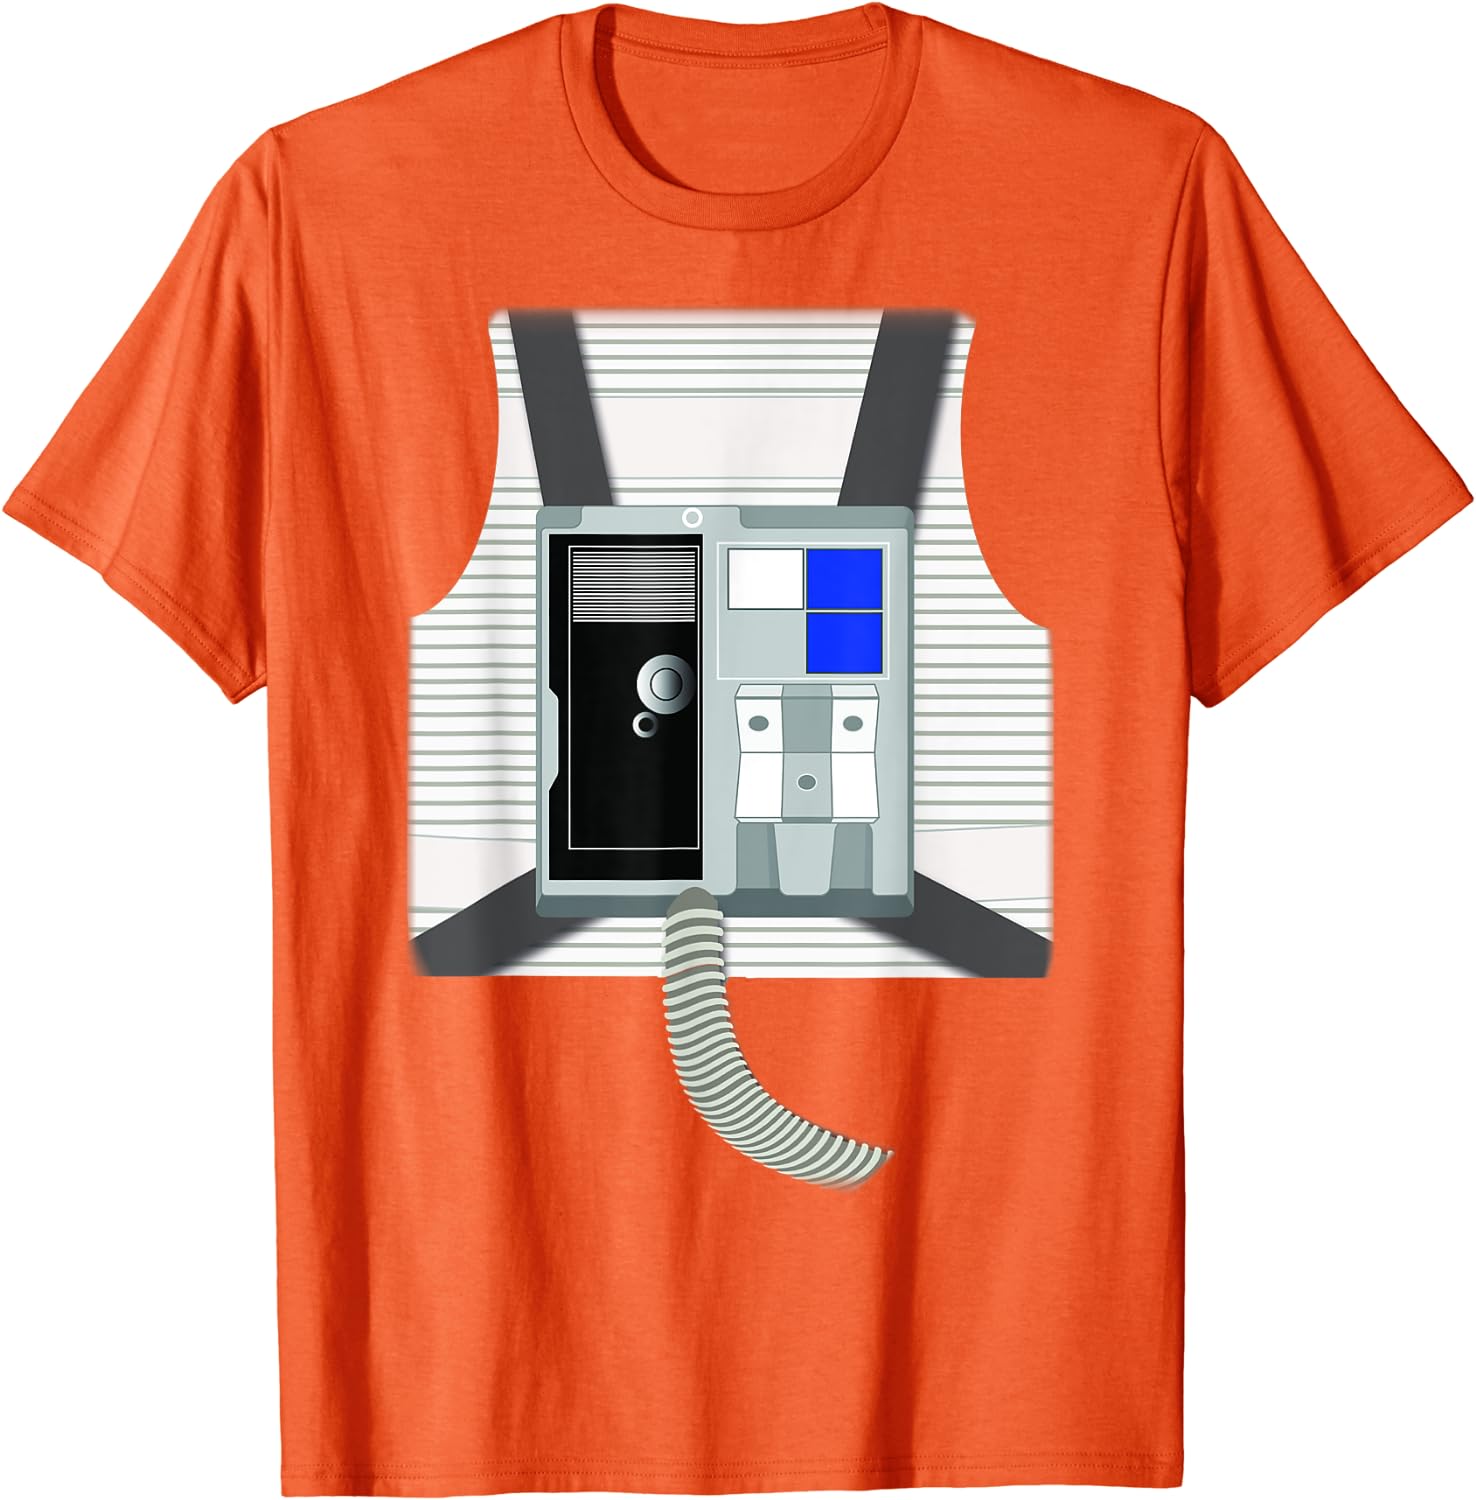 Star Wars Rebel Pilot Costume T-Shirt